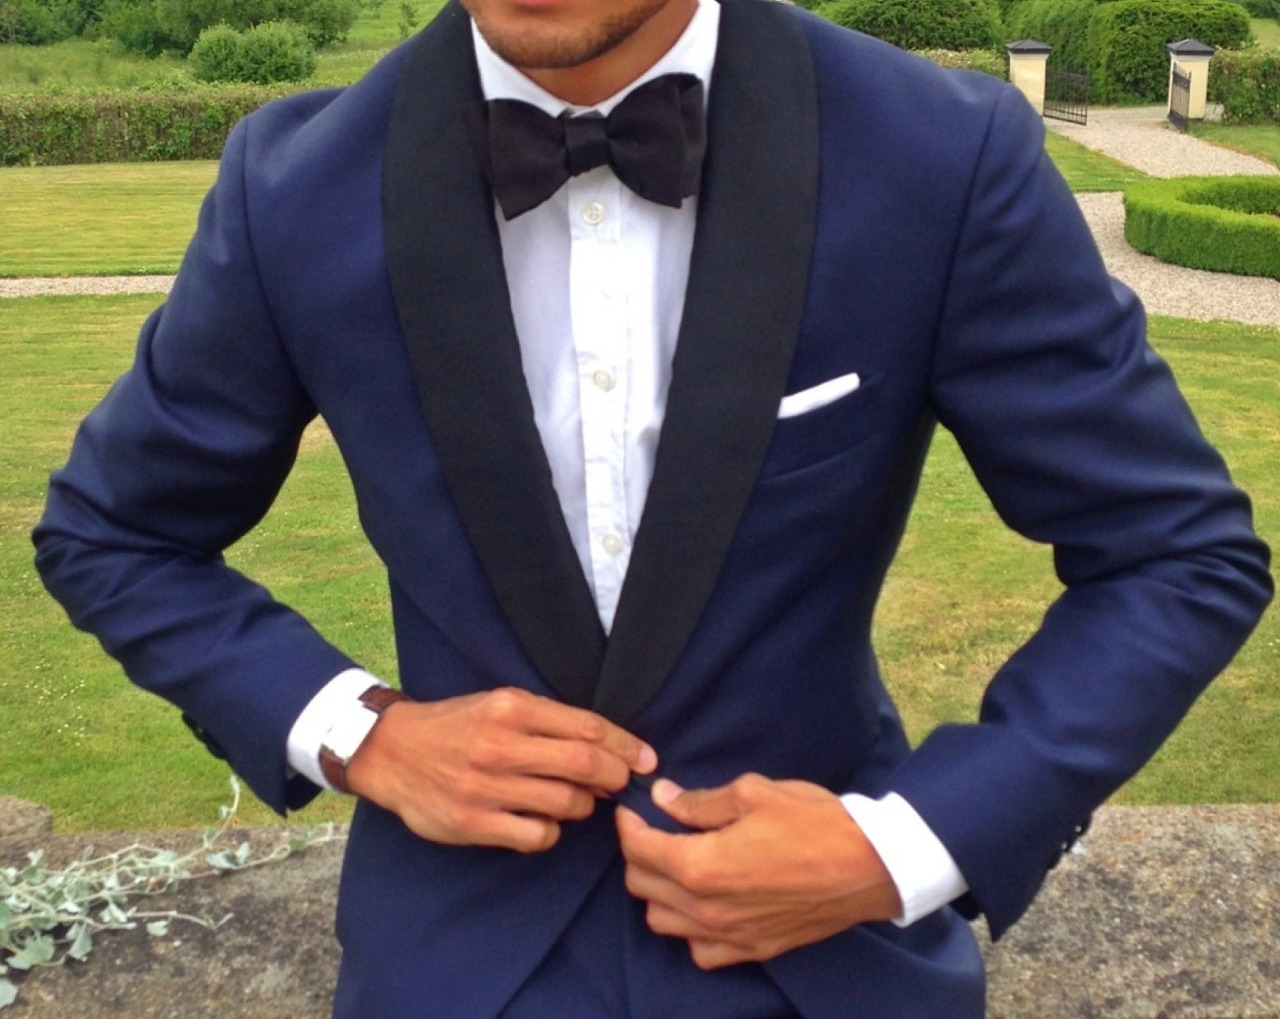 louis vuitton tie with suit